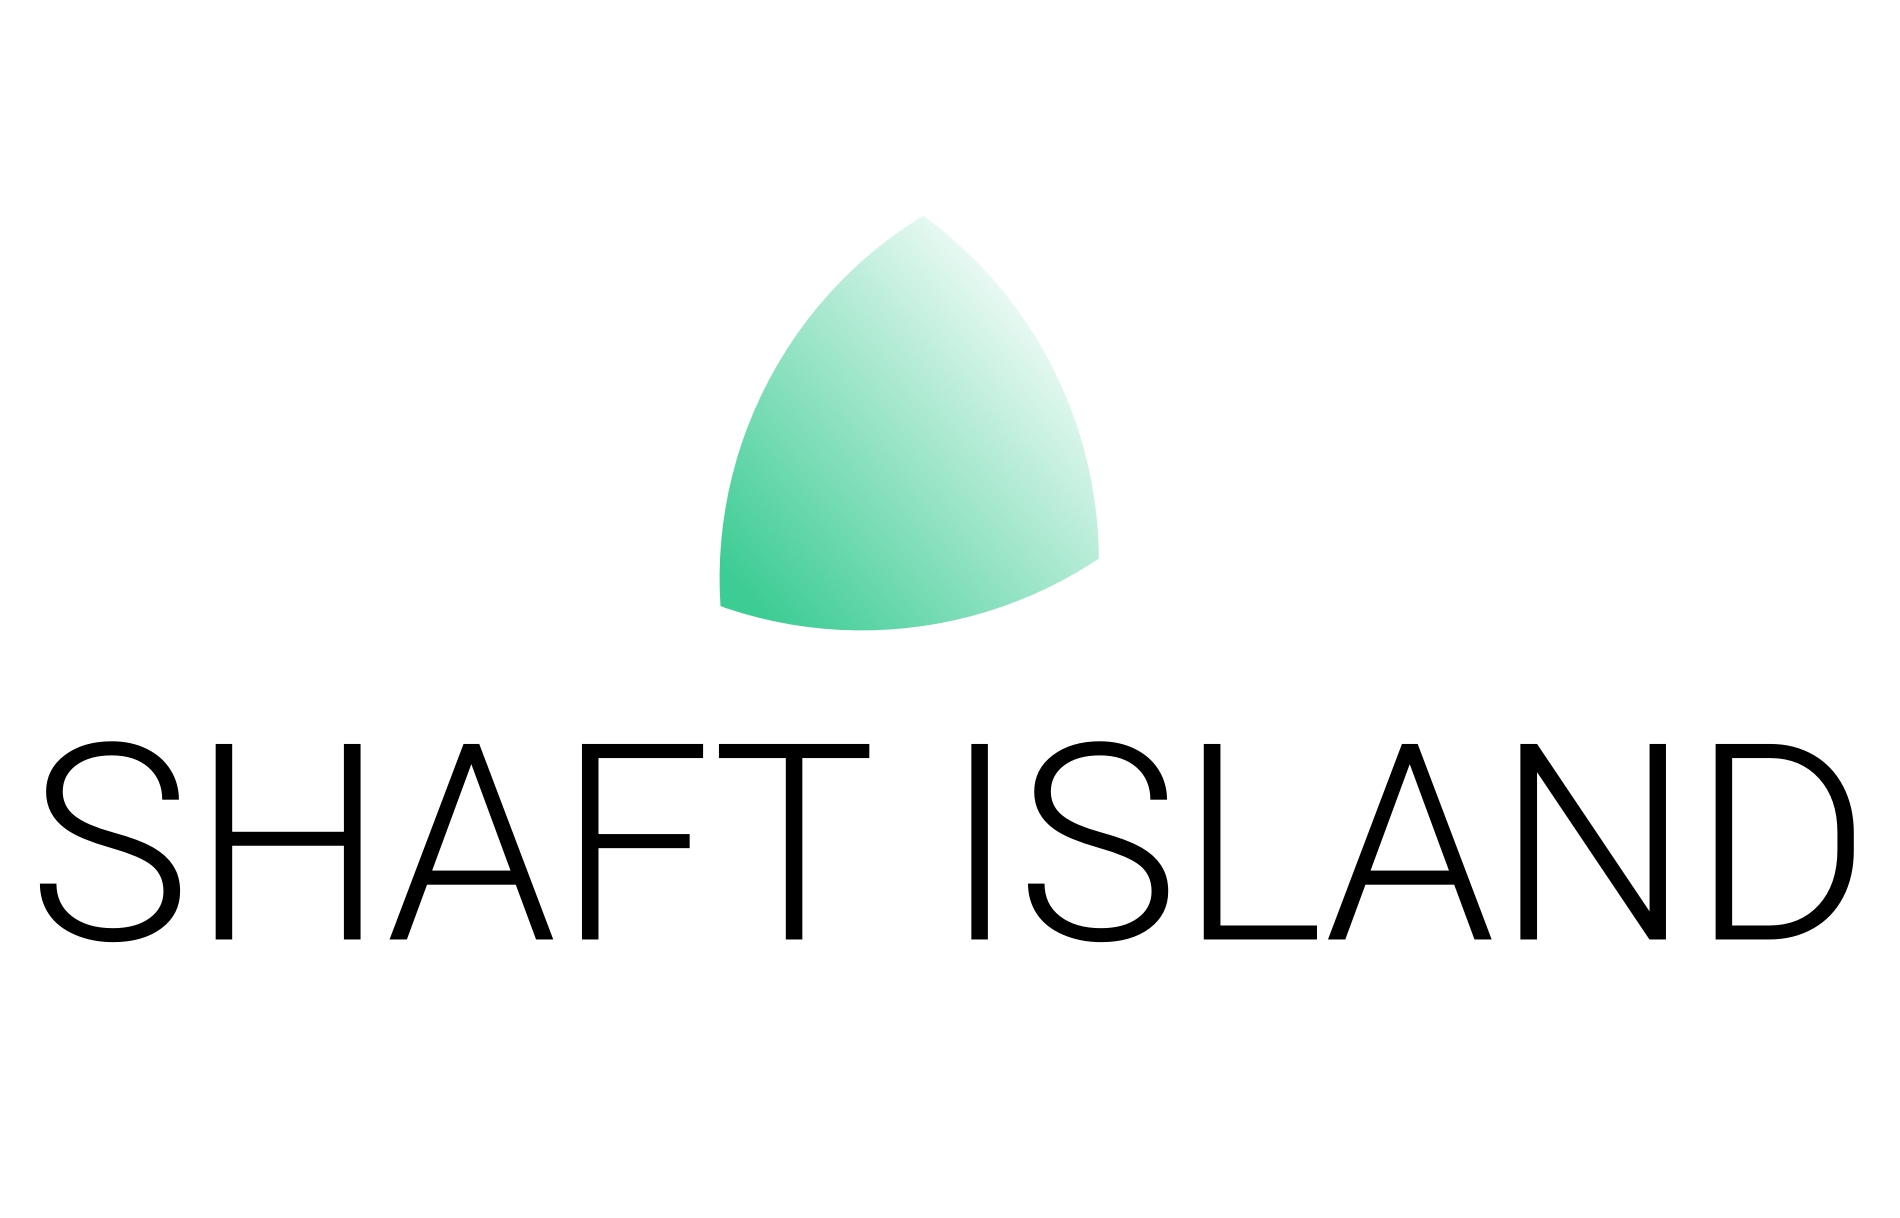 SHAFT ISLAND